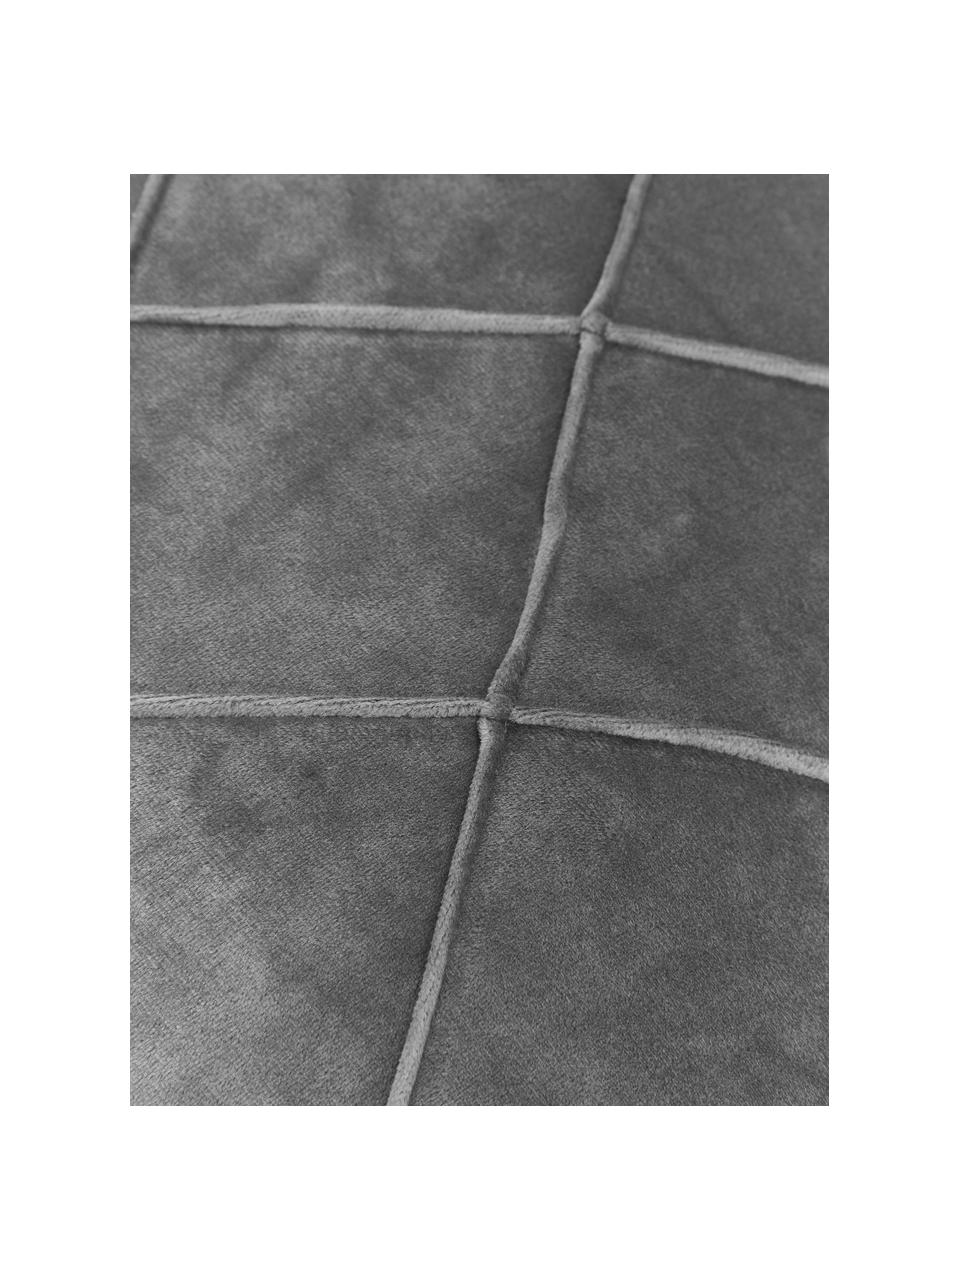 Samt-Kissenhülle Nobless mit erhabenem Rautenmuster, 100 % Polyestersamt, Dunkelgrau, B 40 x L 40 cm